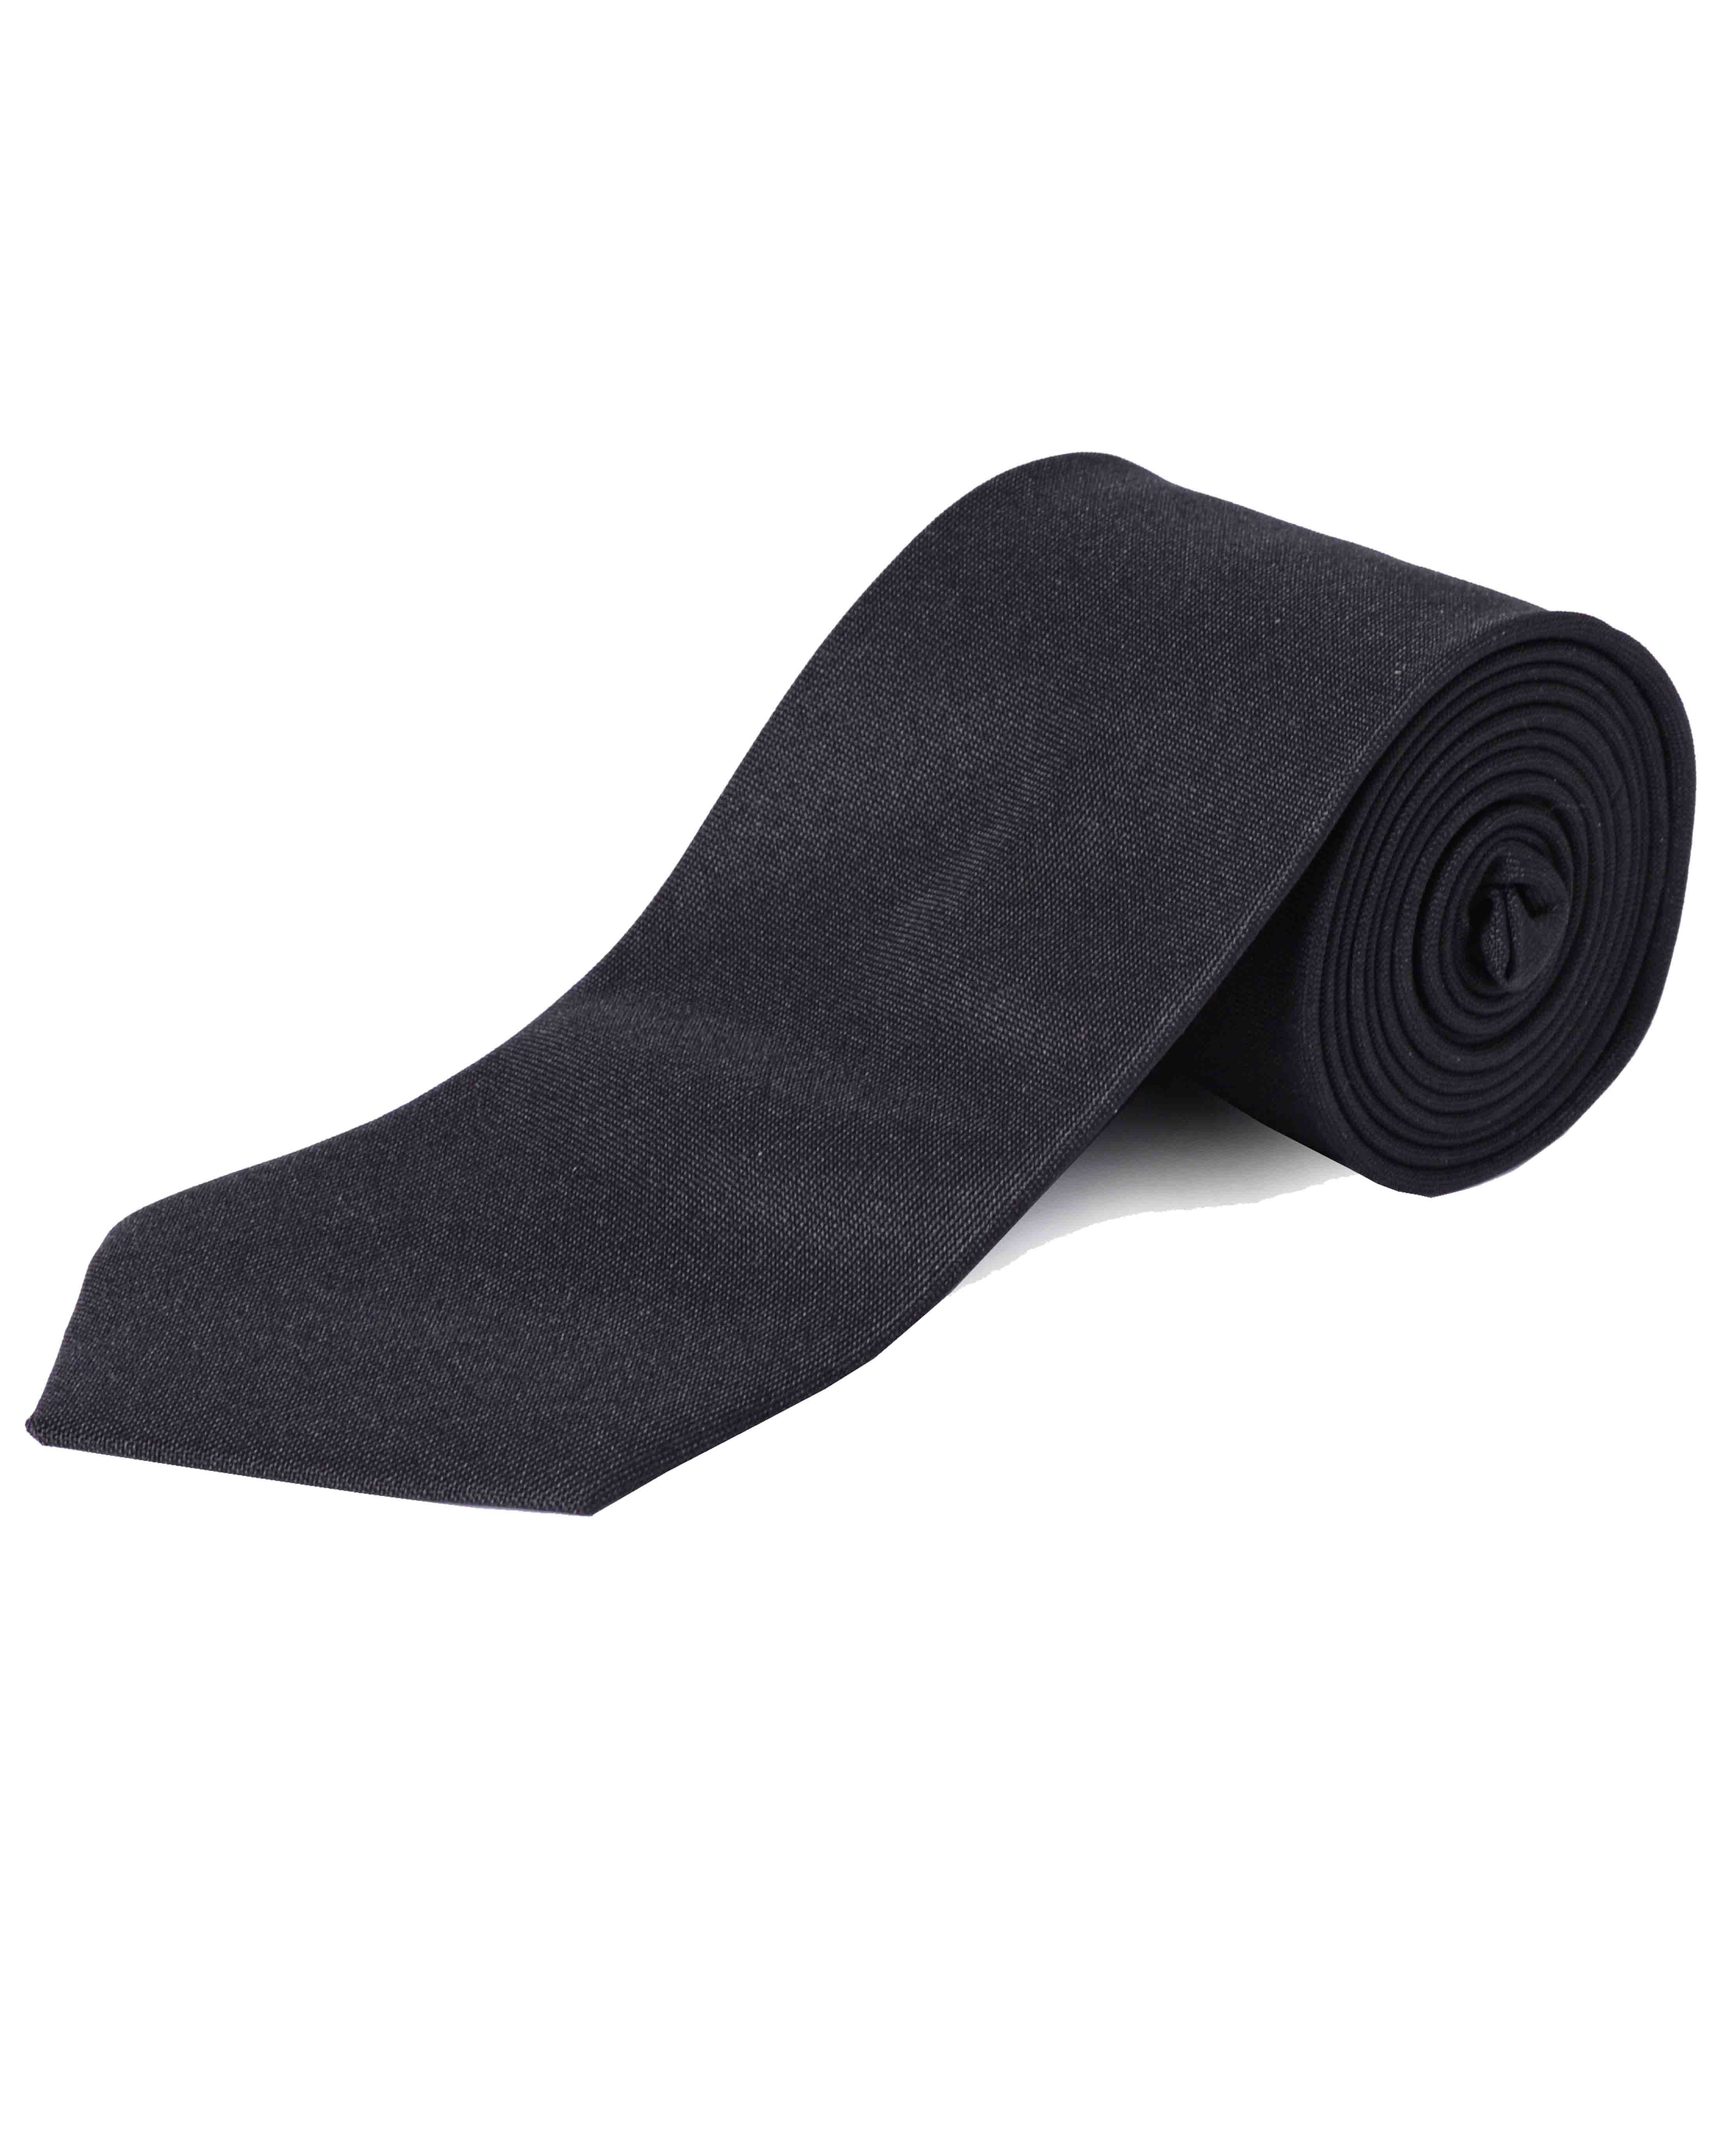 Standard Black Tie